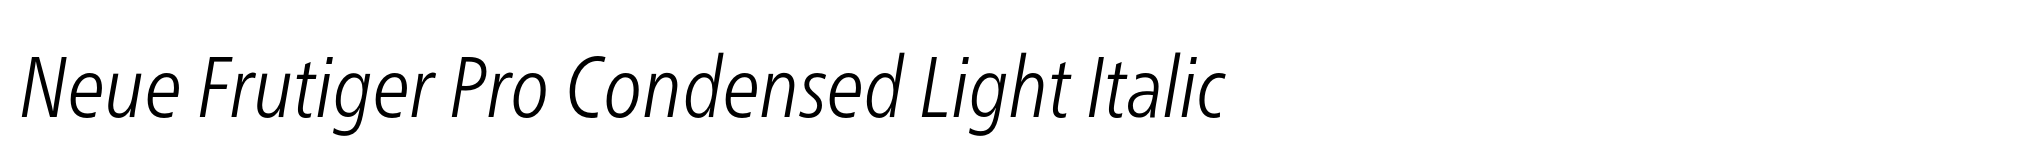 Neue Frutiger Pro Condensed Light Italic image